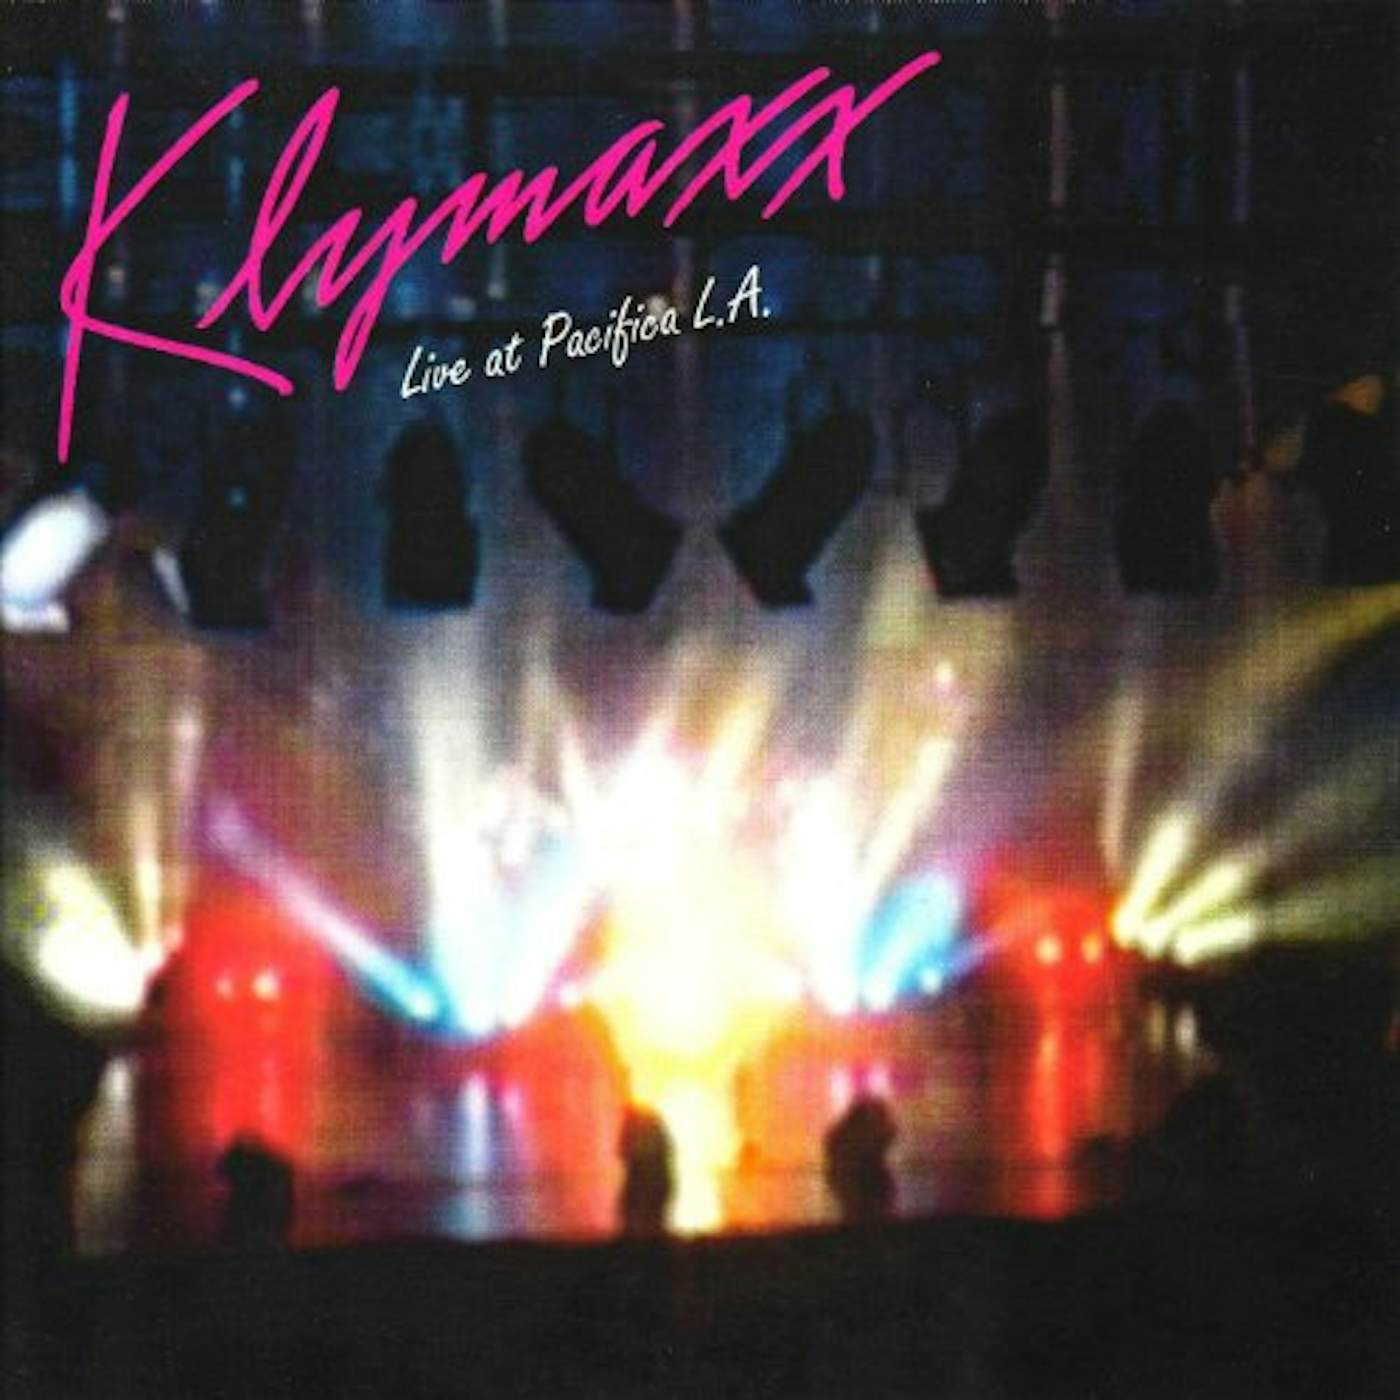 KLYMAXX LIVE AT PACIFICA L.A. CD